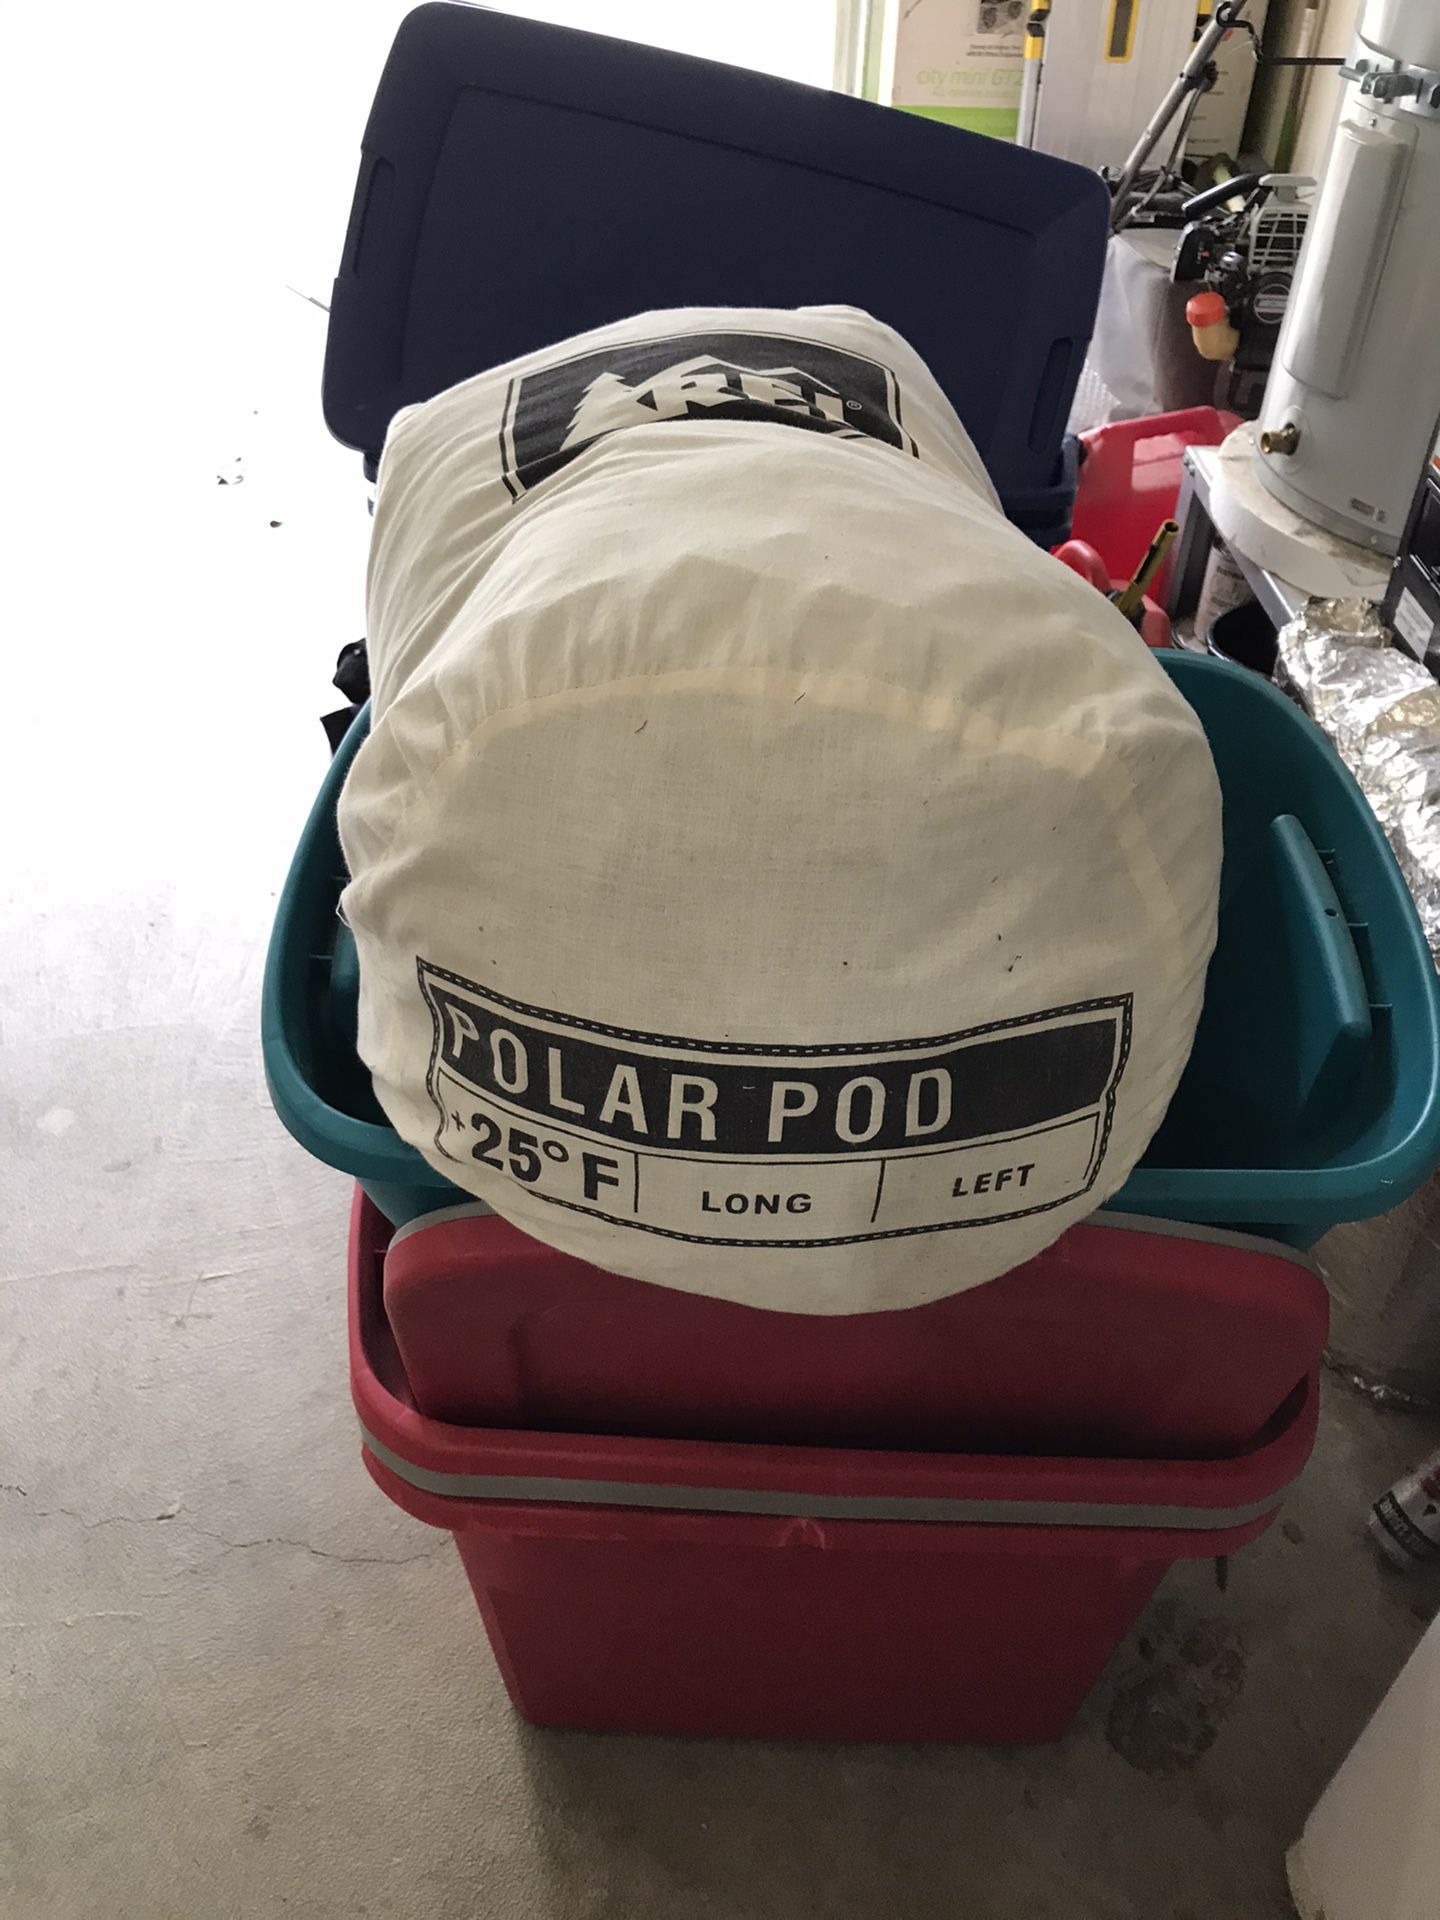 REI polar pod sleeping bag